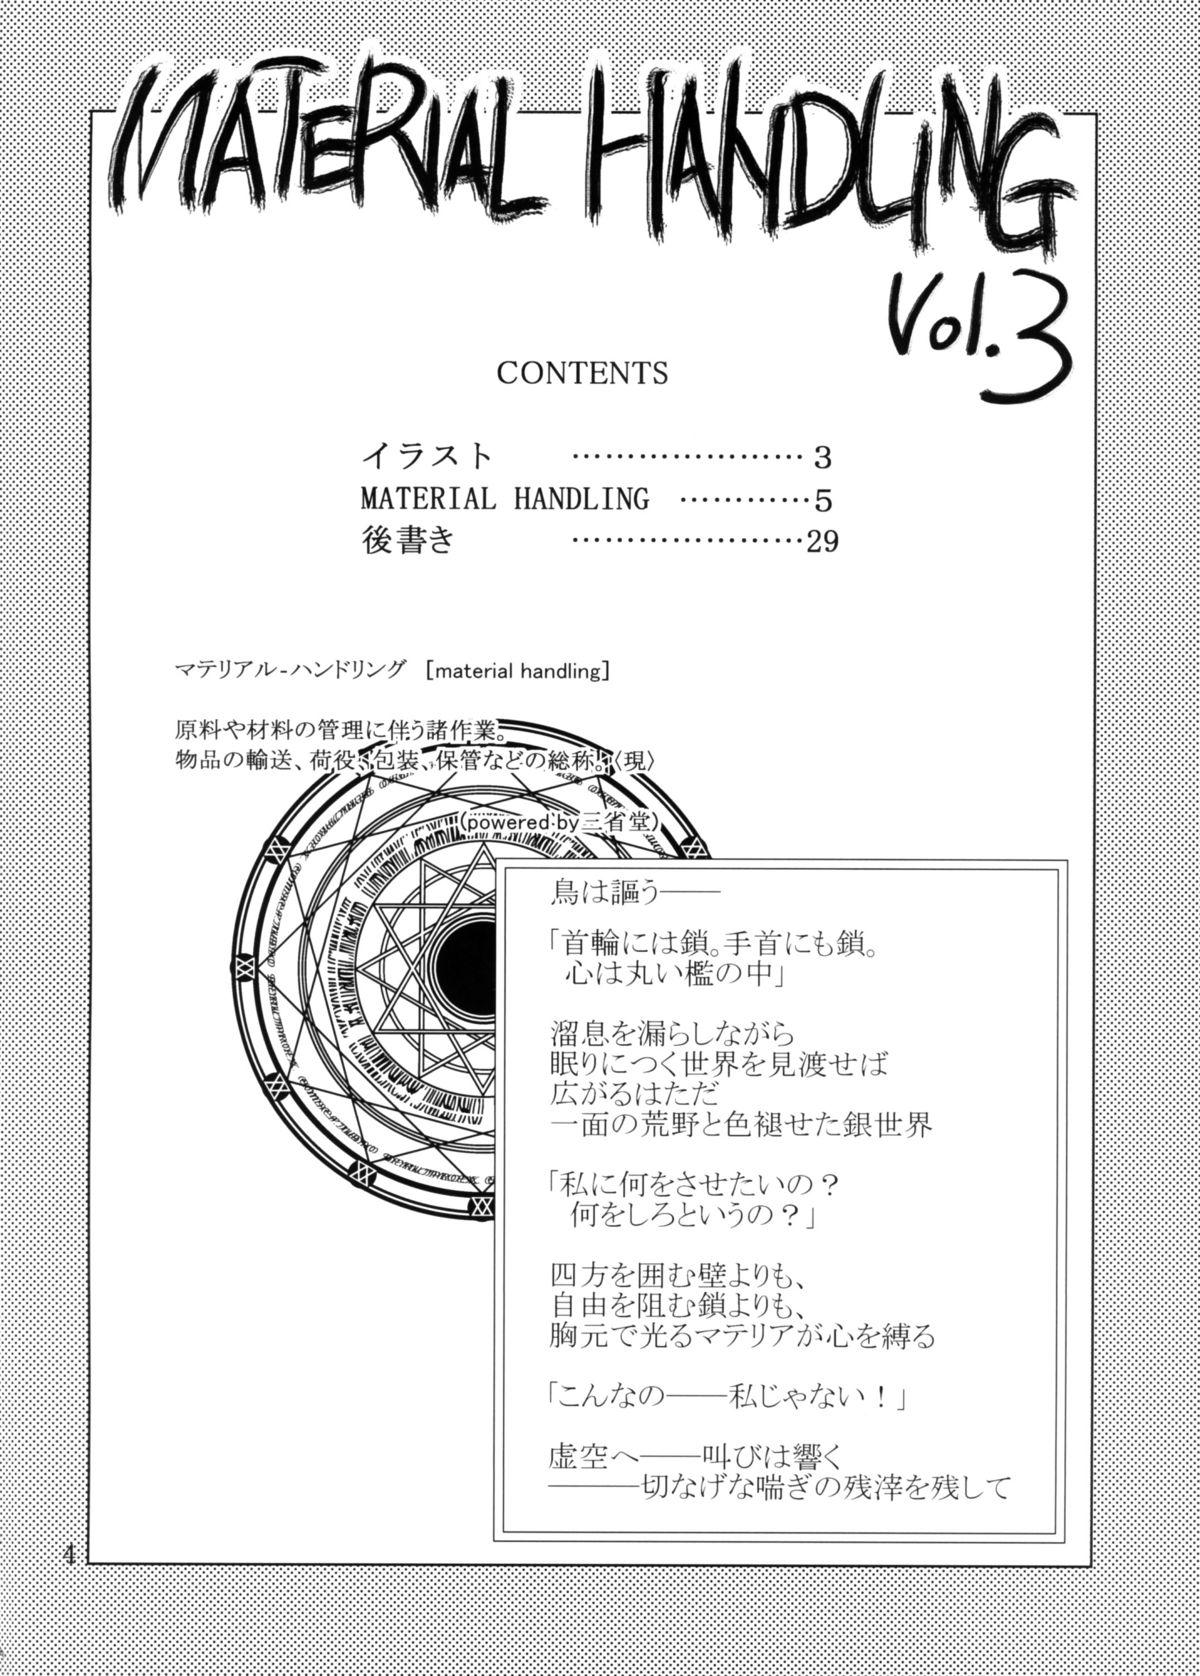 Spying Material Handling Vol. 3 - Final fantasy vii Strip - Page 3